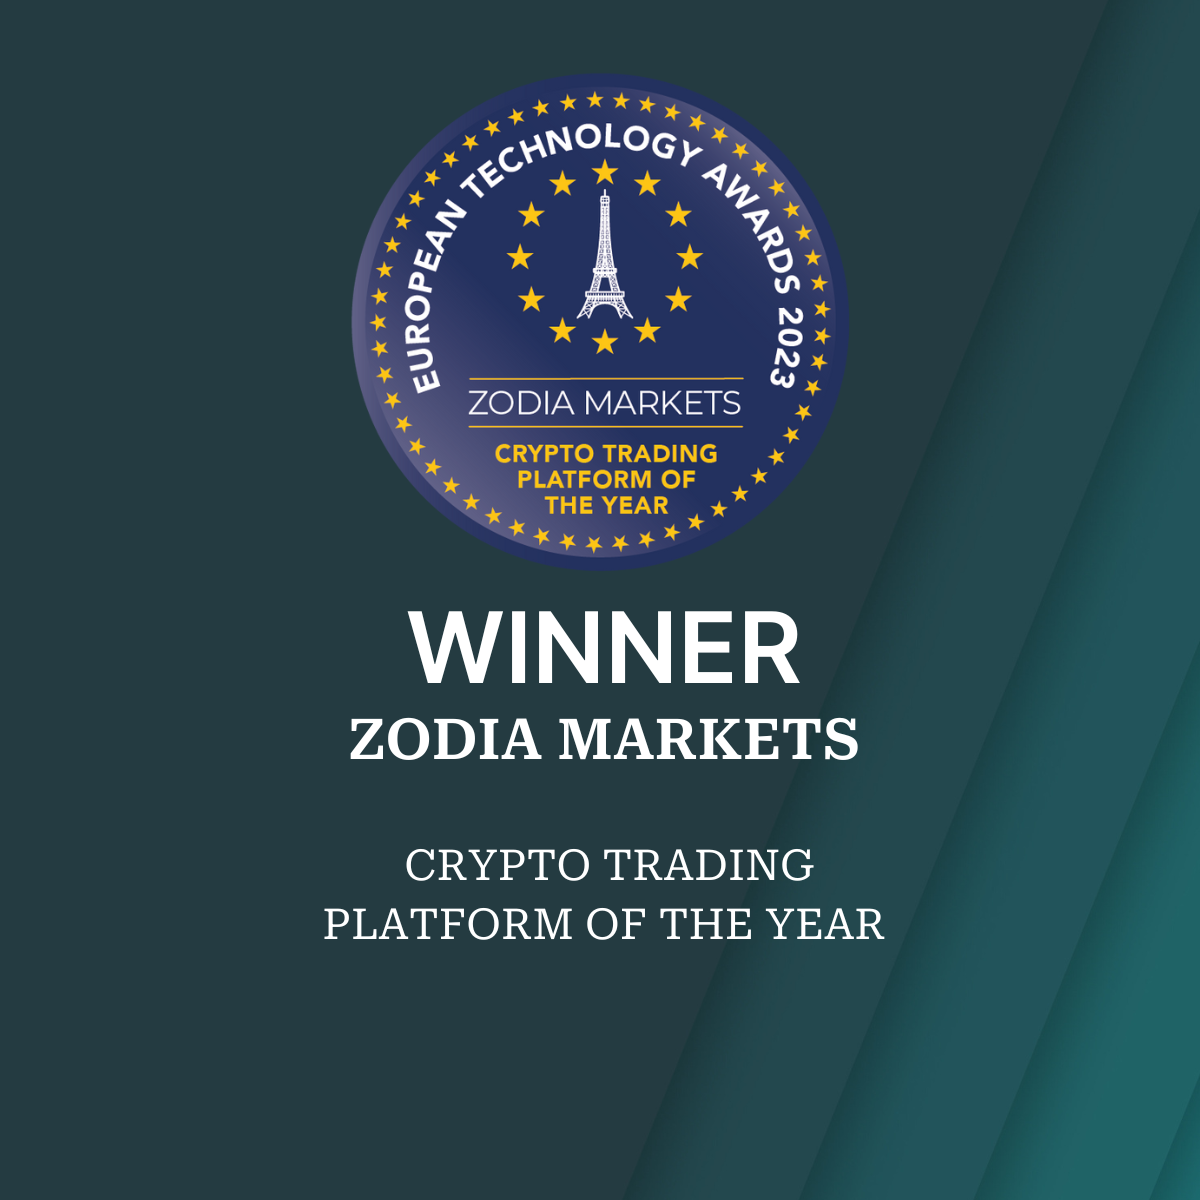 Zodia Markets wins Crypto Trading Platform of the Year at the European Technology Awards.